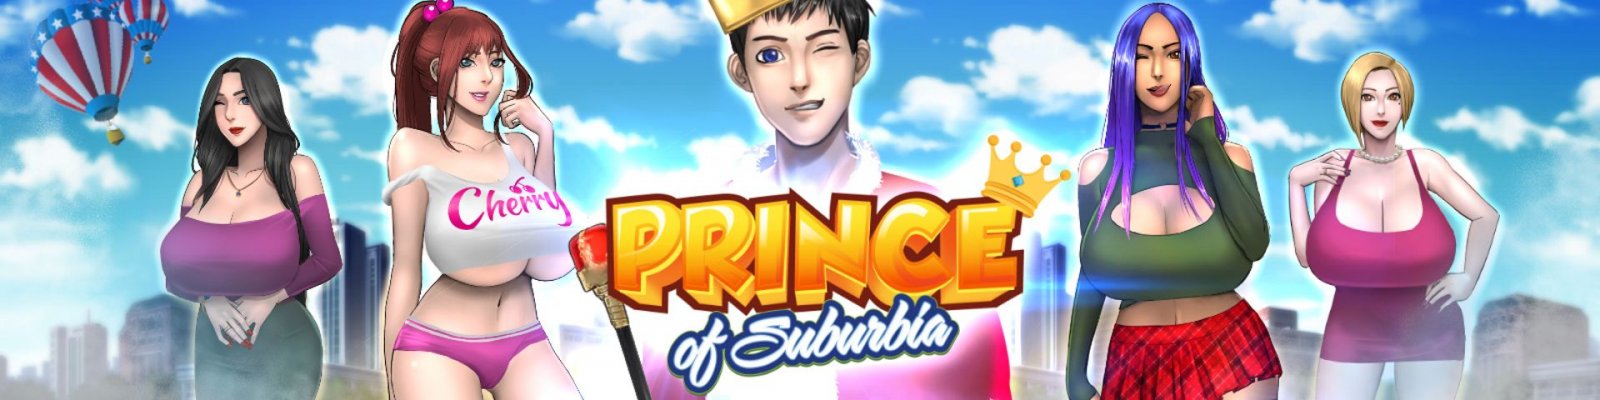 Prince Of Suburbia1.jpg